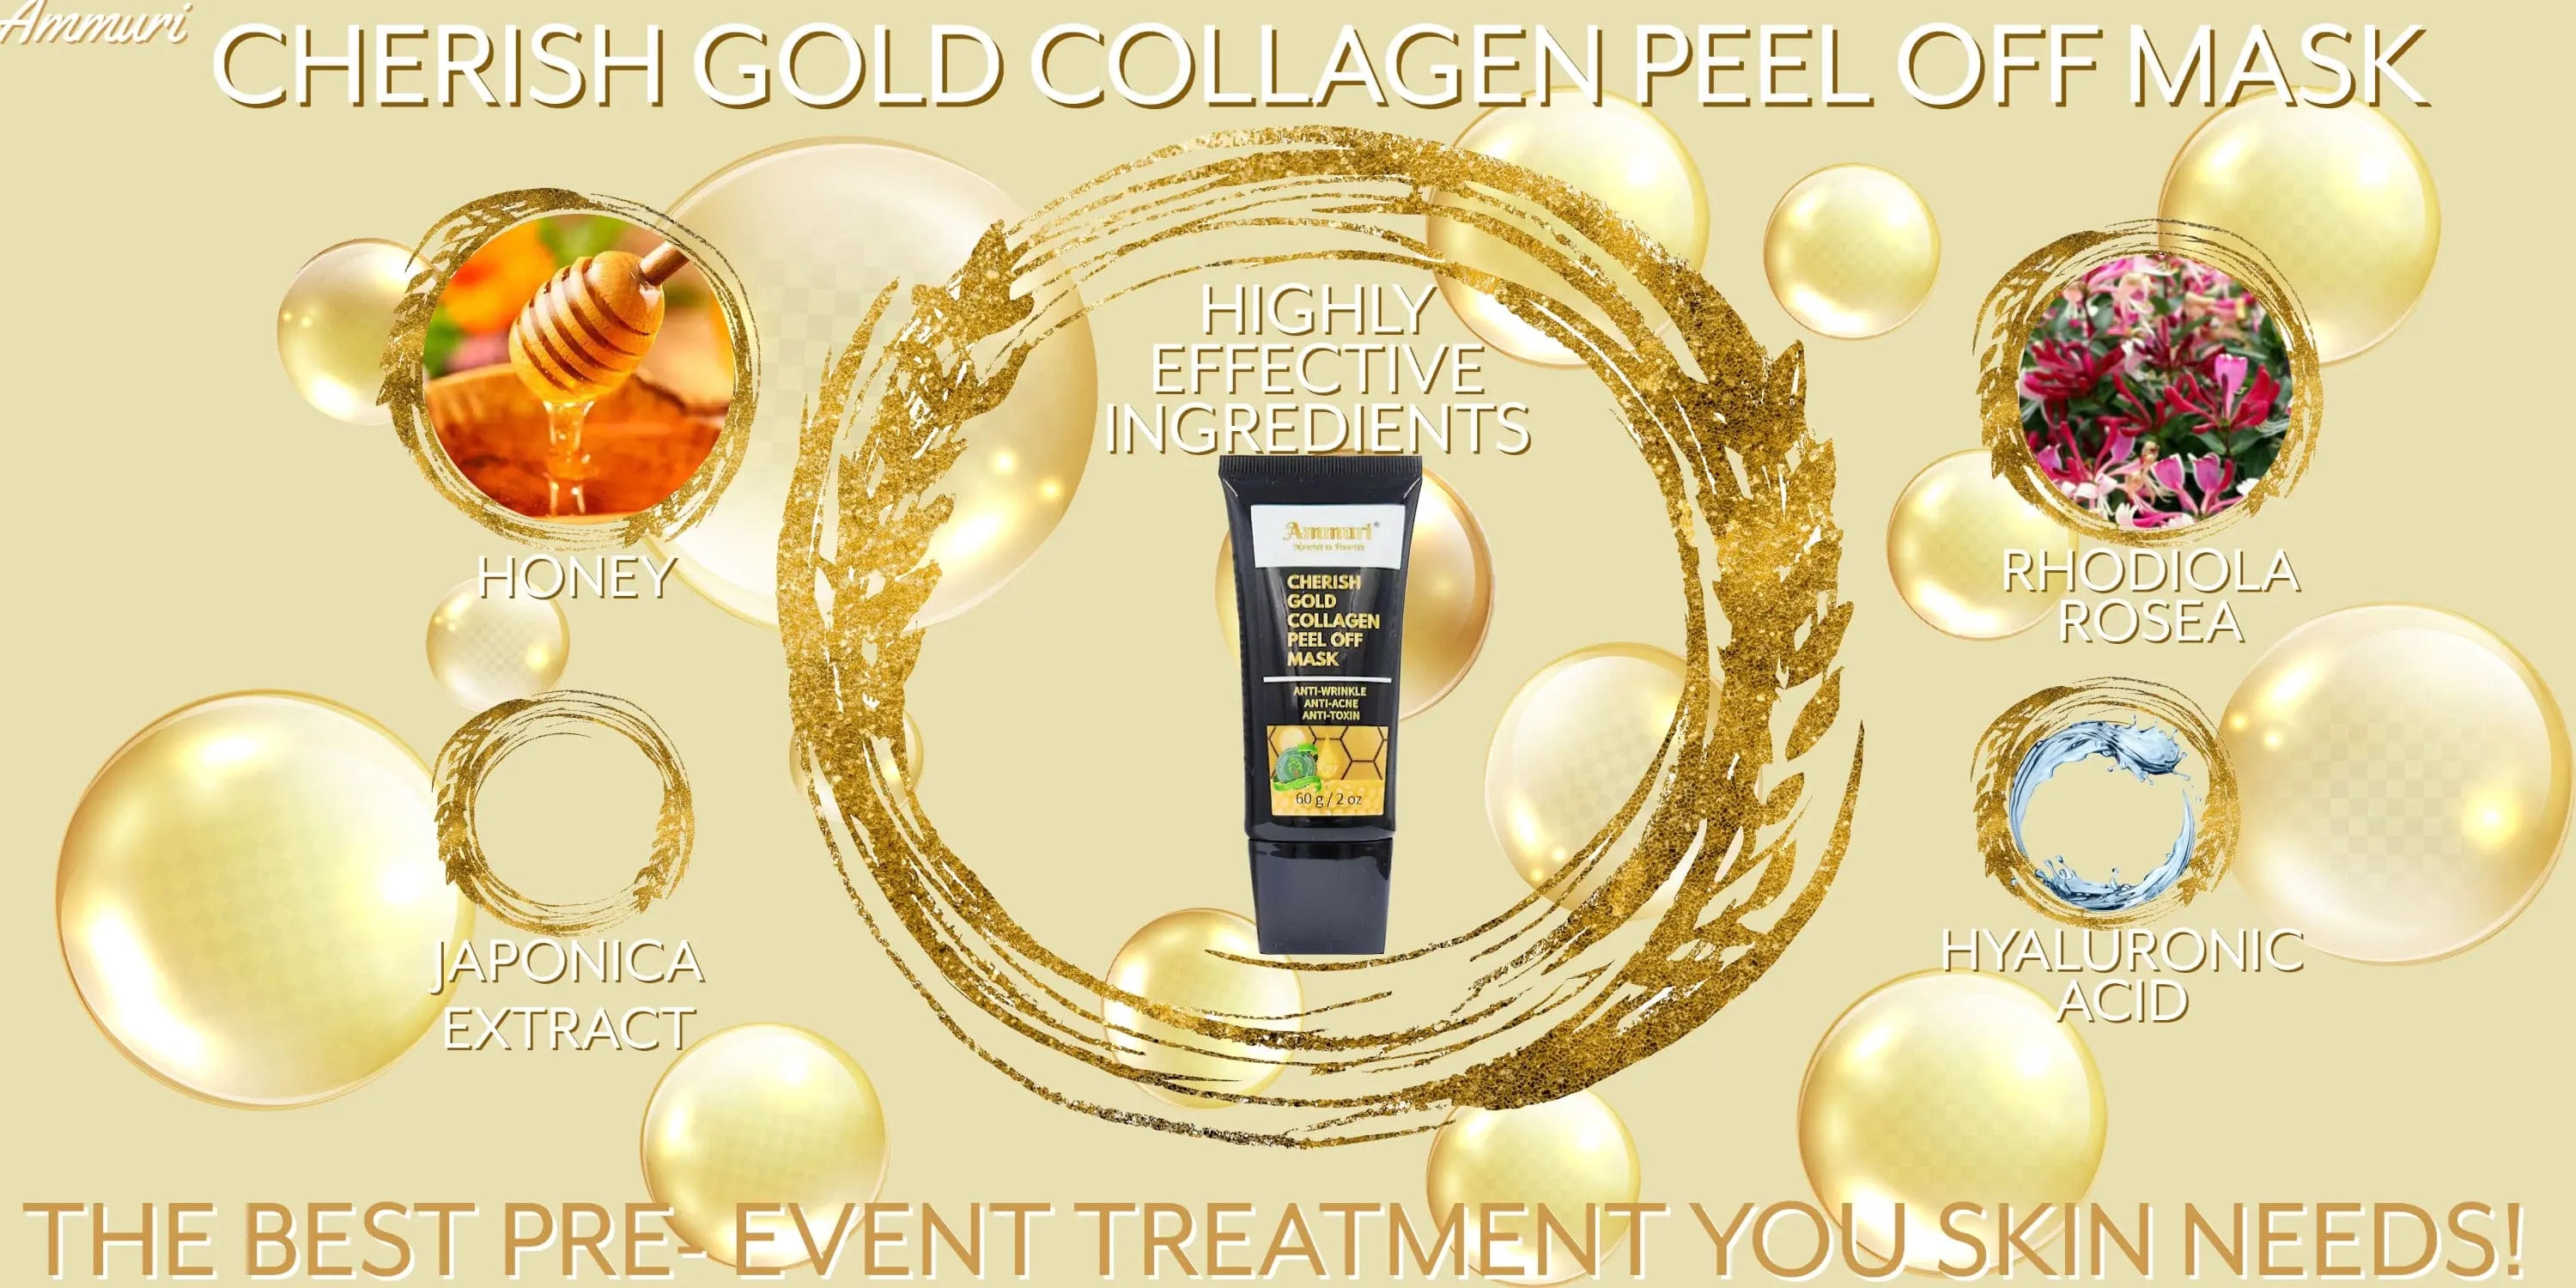 24K Gold Collagen Peel Off Mask Anti Aging Anti Wrinkle Anti Acne & Anti Toxin Ammuri Skincare